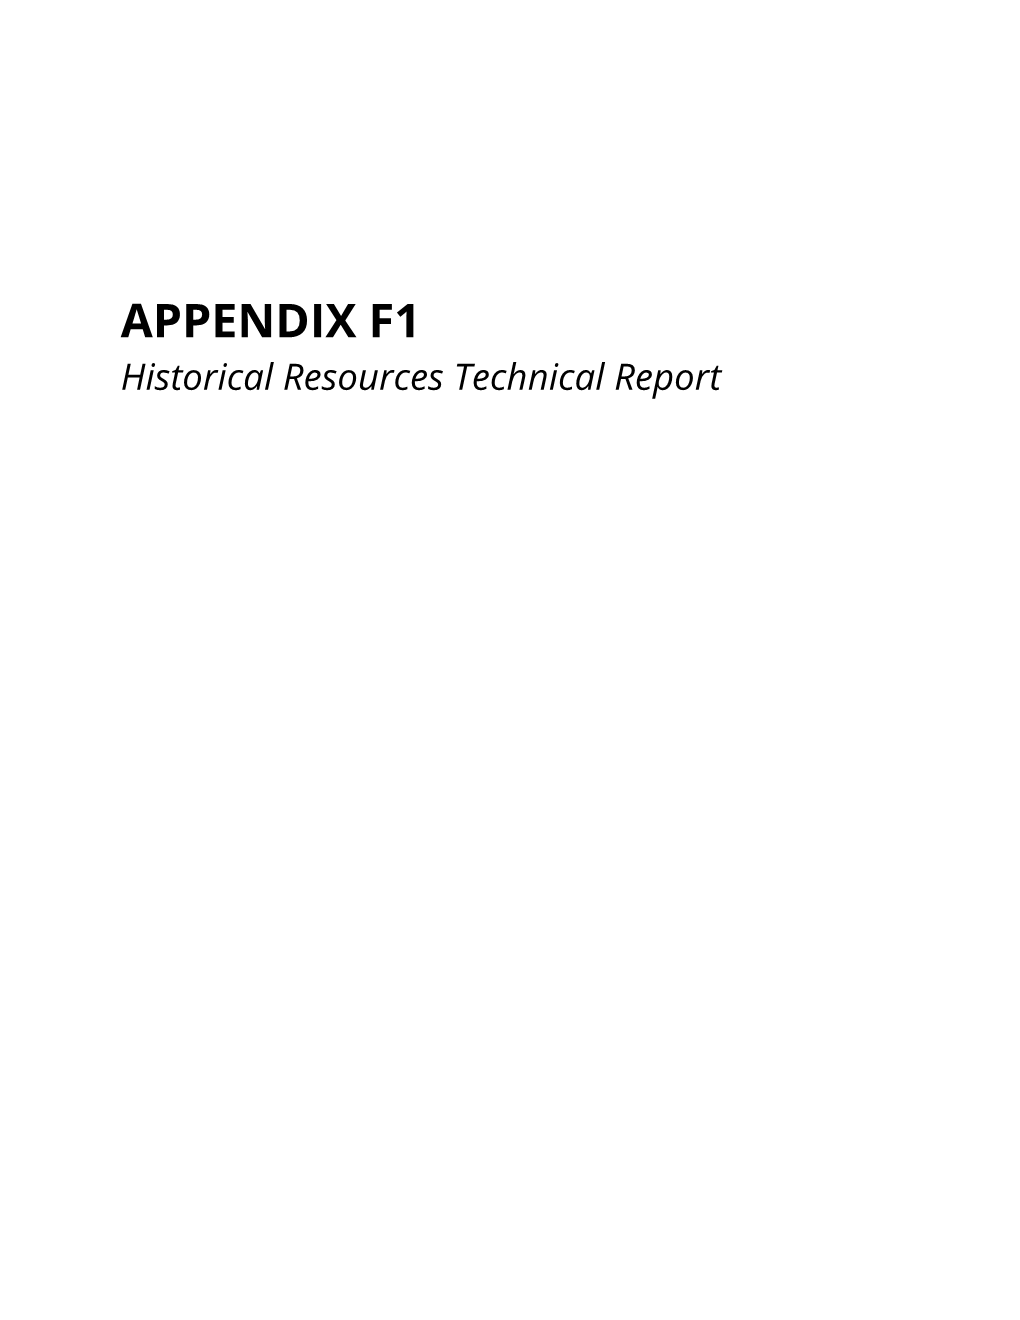 APPENDIX F1 Historical Resources Technical Report